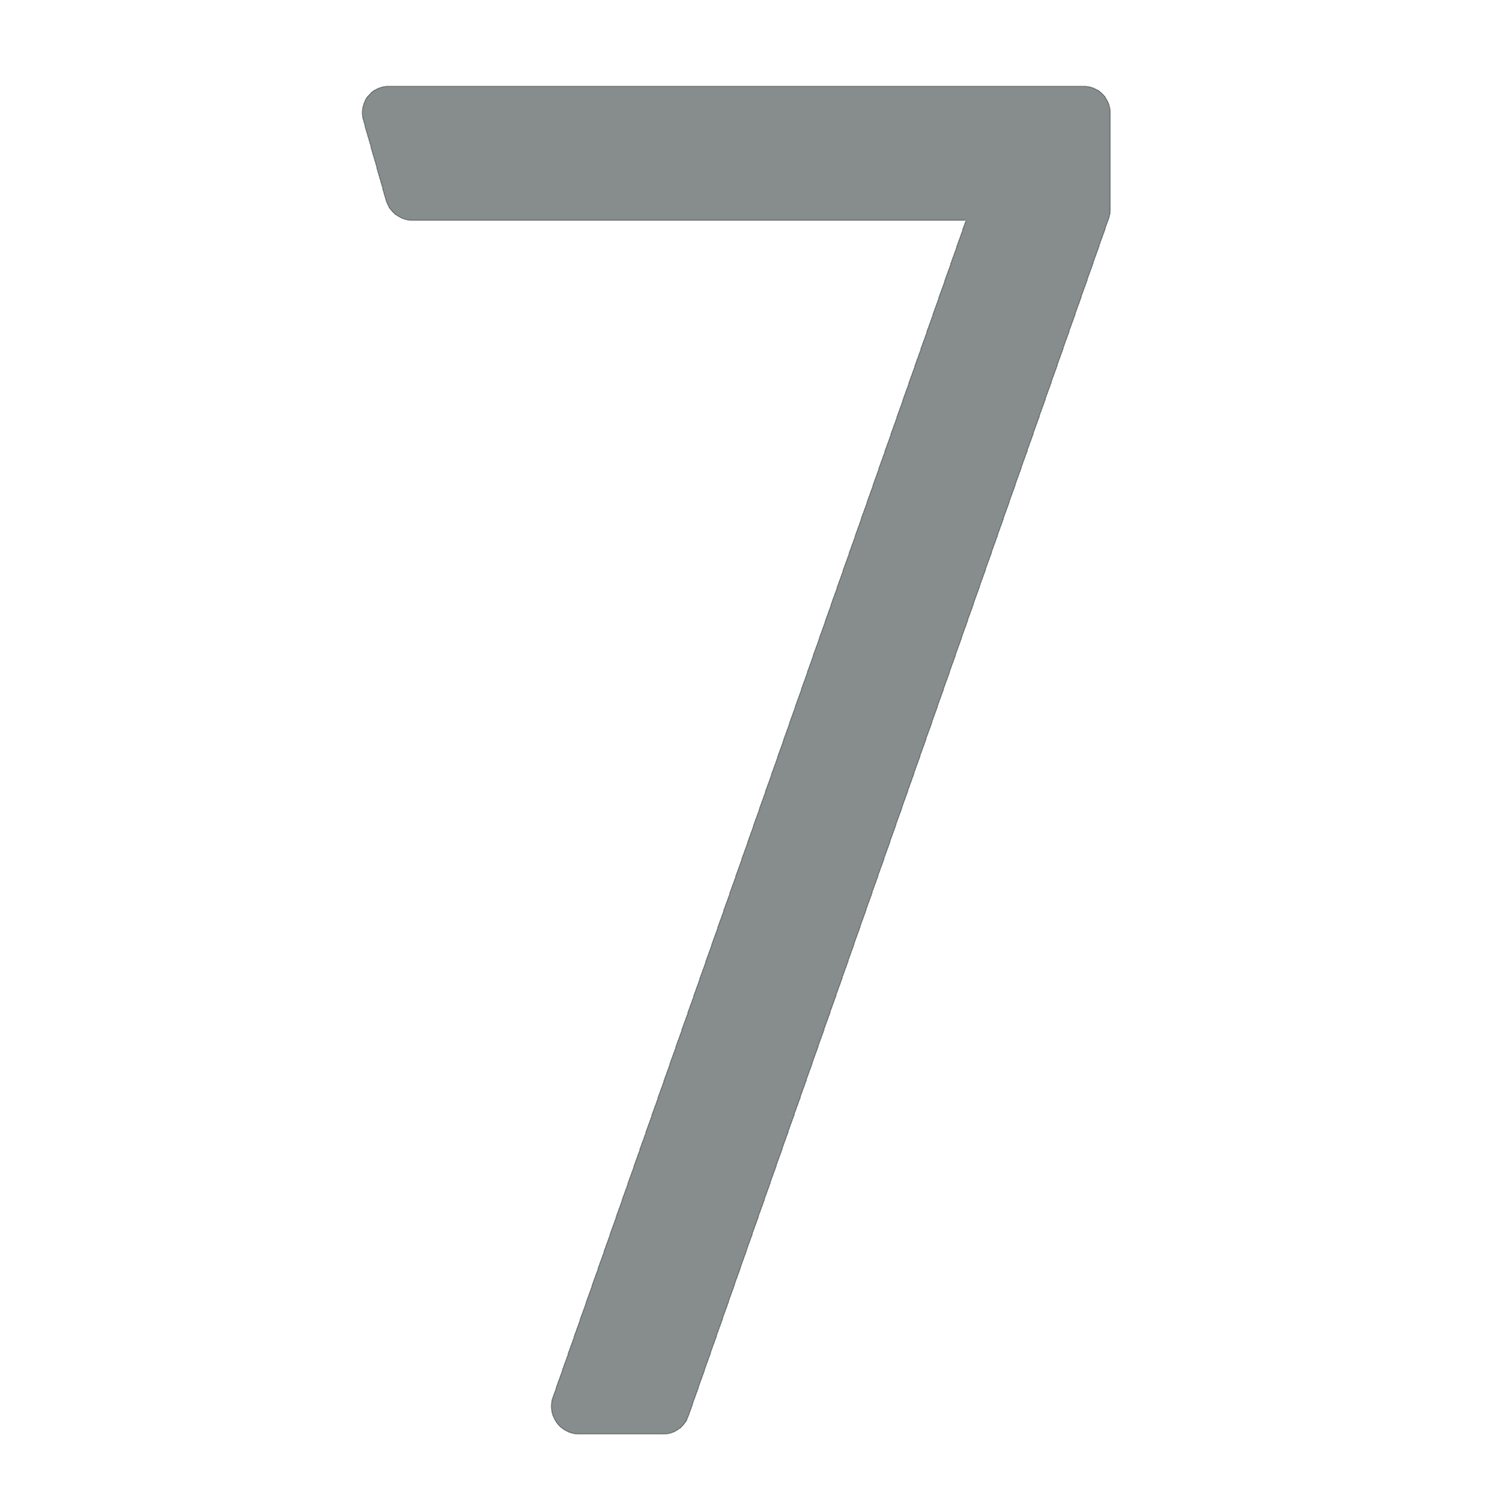 Samoprzylepny numer domu „7” - 245 mm na szary